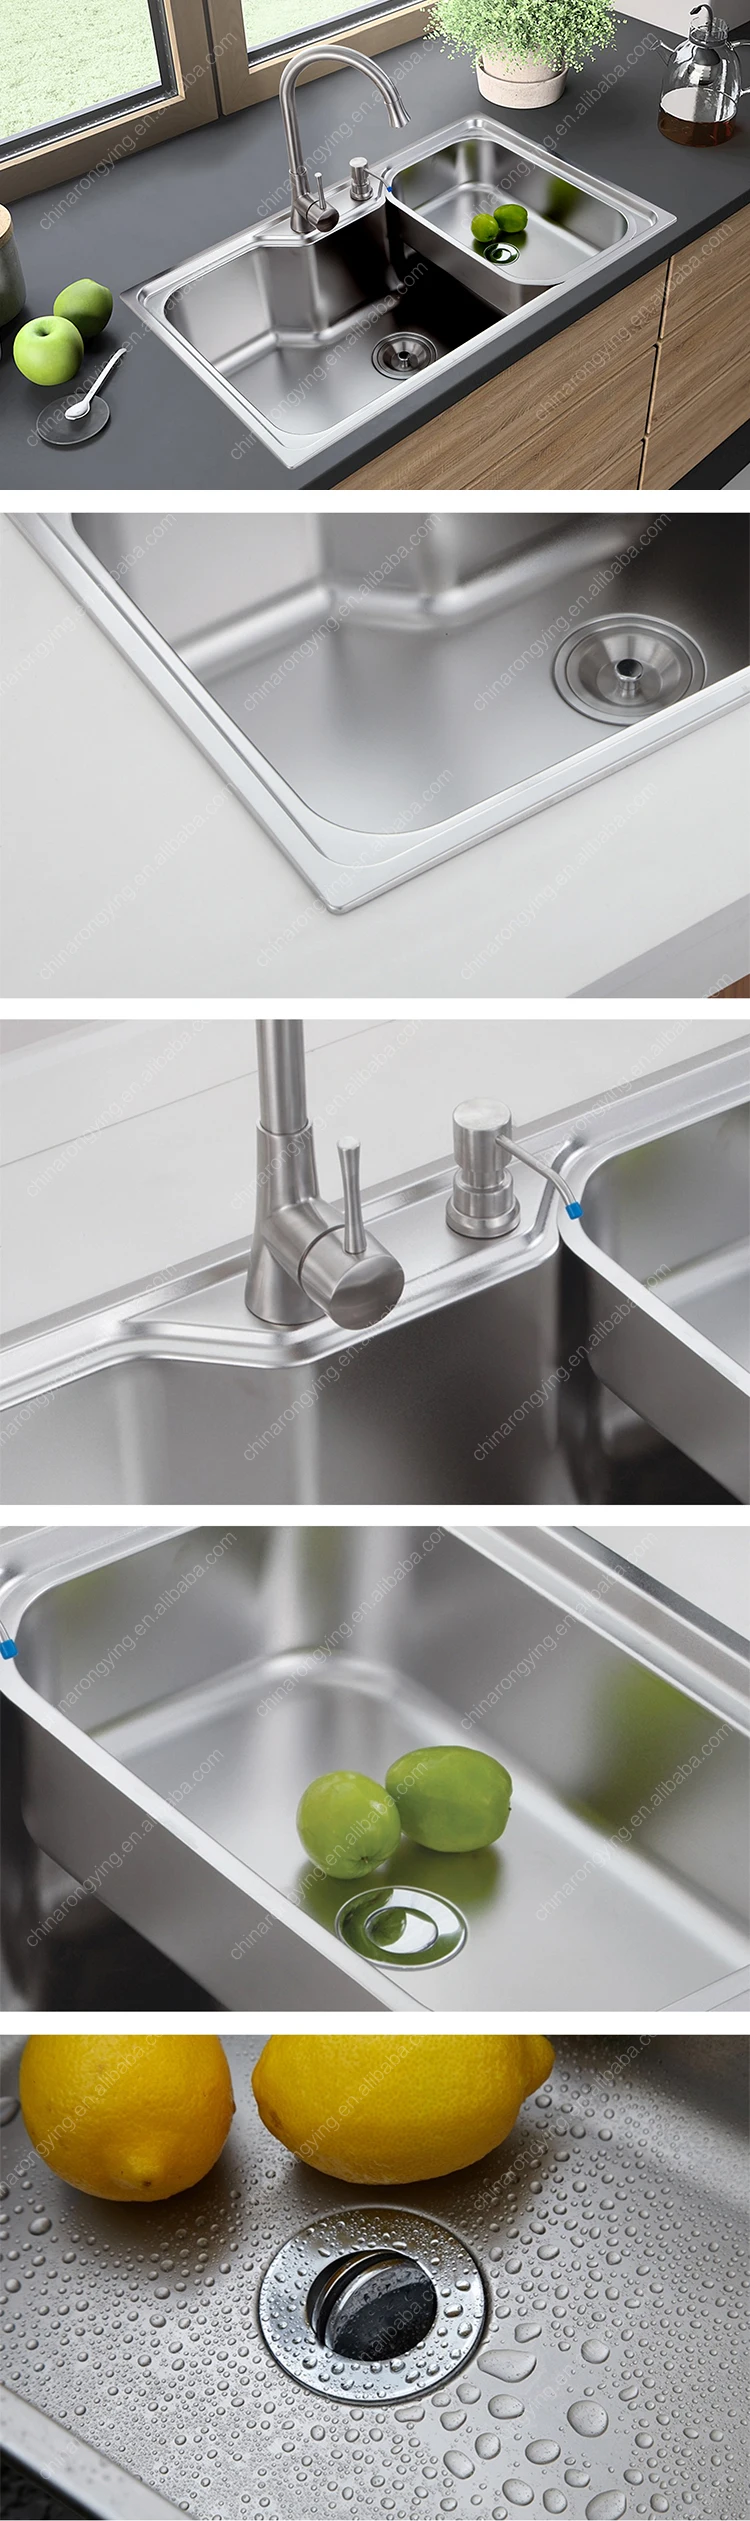 670 Stainless Steel Kitchen Sink Air Rank Buy Stainless Steel Kitchen Sink Product On Alibabacom